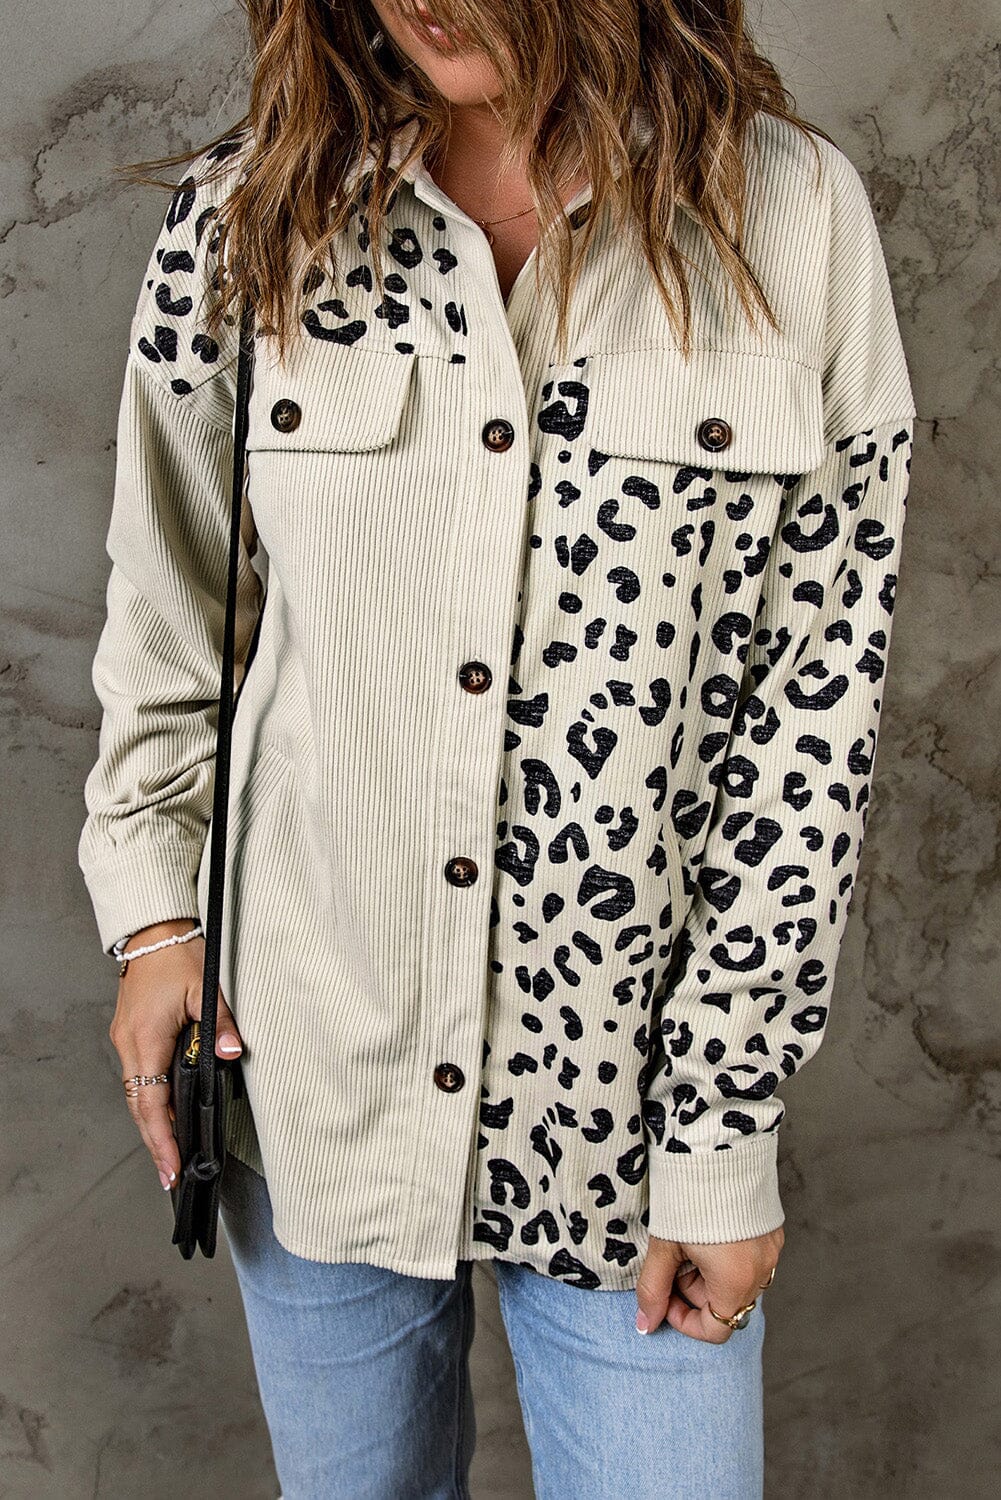 Double Take Leopard Print Pocketed Corduroy Jacket - Sydney So Sweet